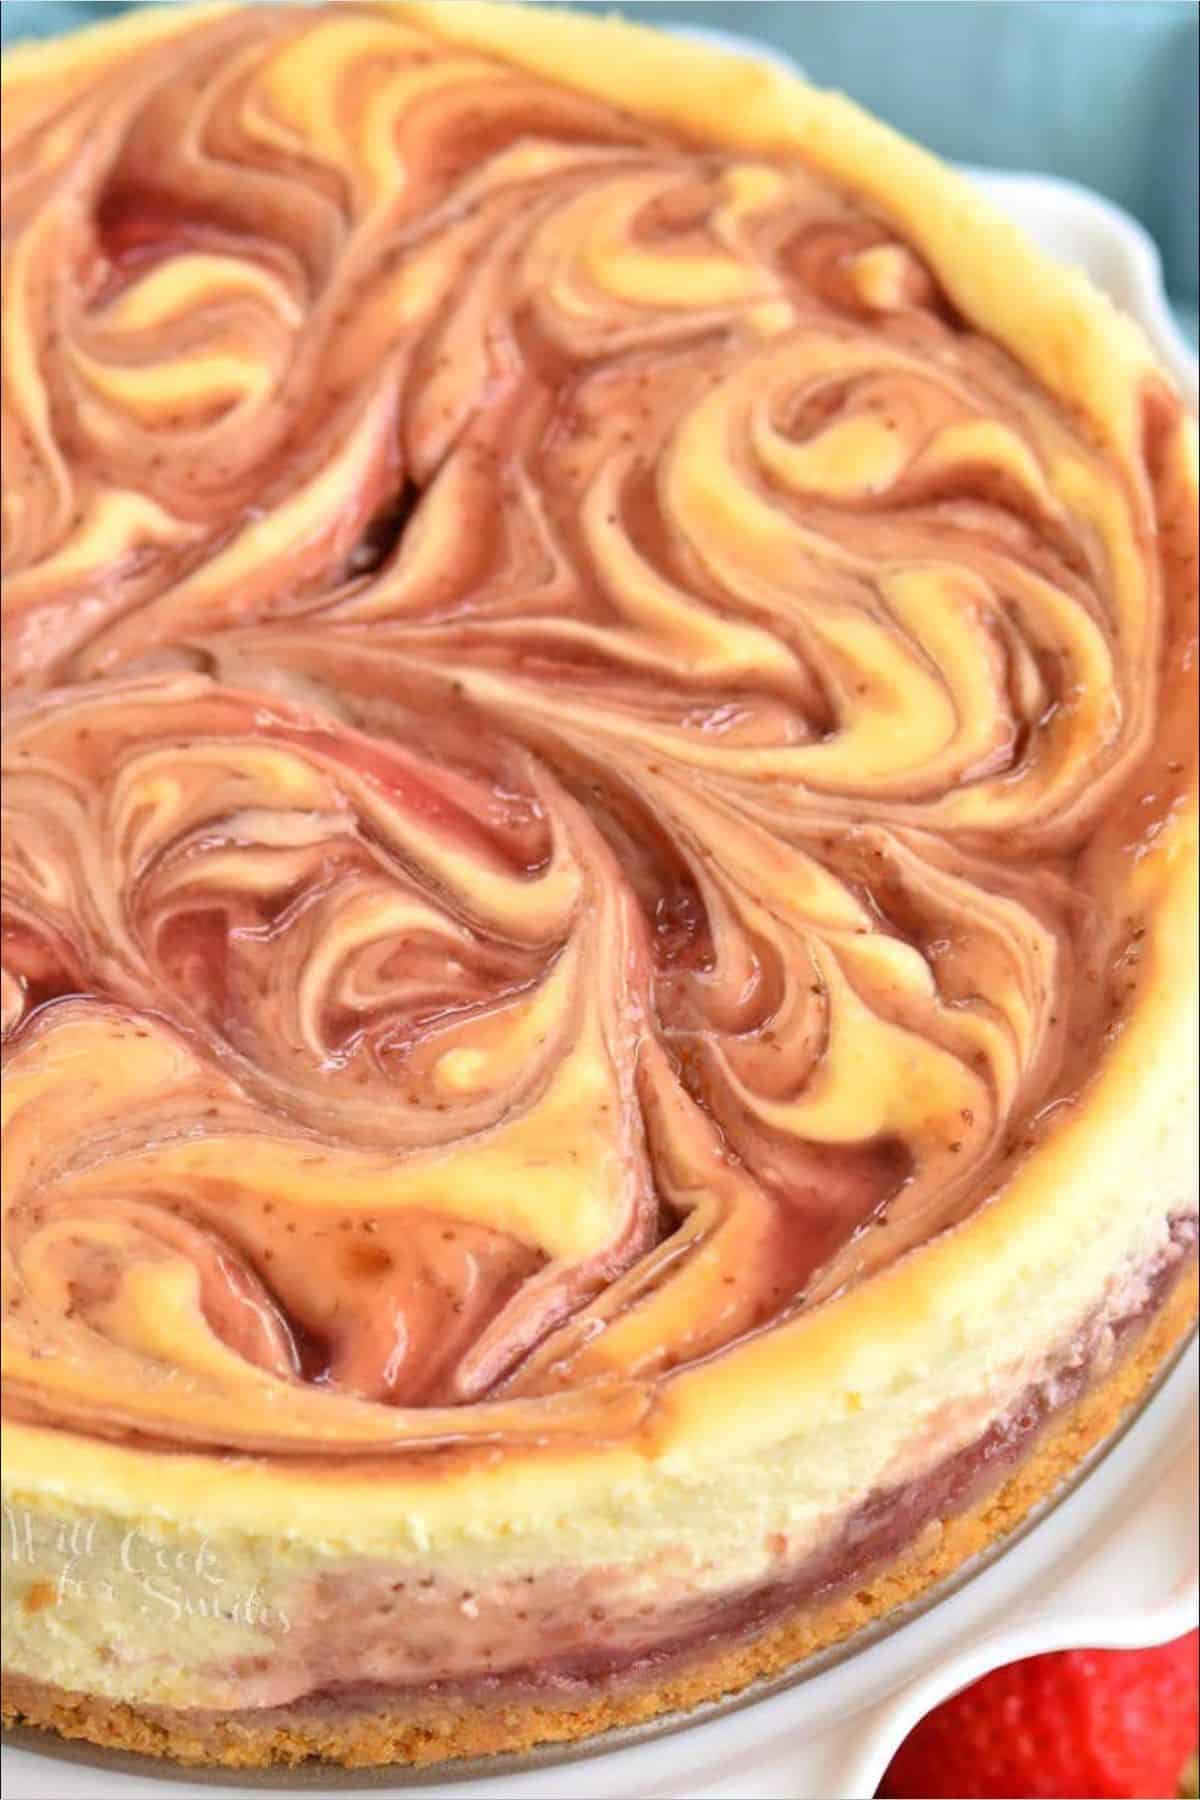 baked strawberry swirled cheesecake on the cake plate.